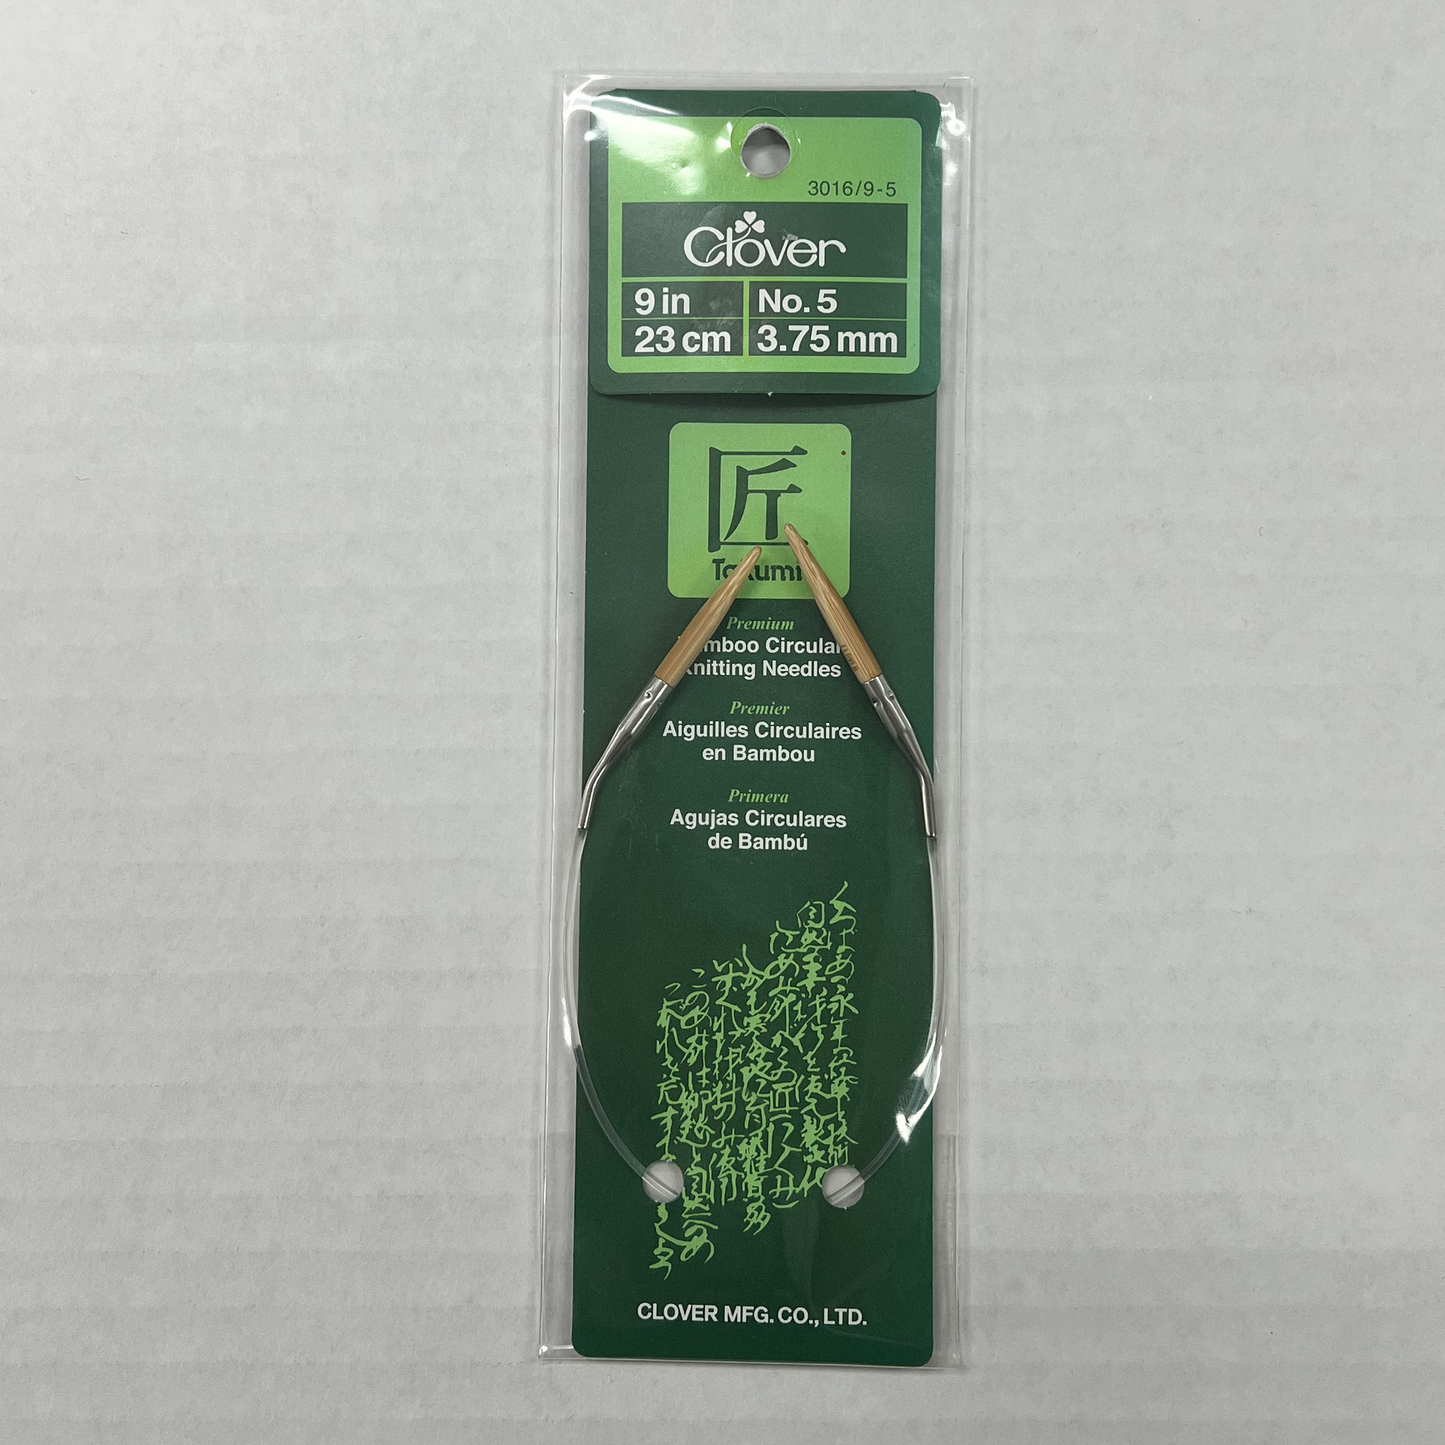 Clover - Takumi Bamboo - US 5 / 3.75mm Fixed Circular Needles